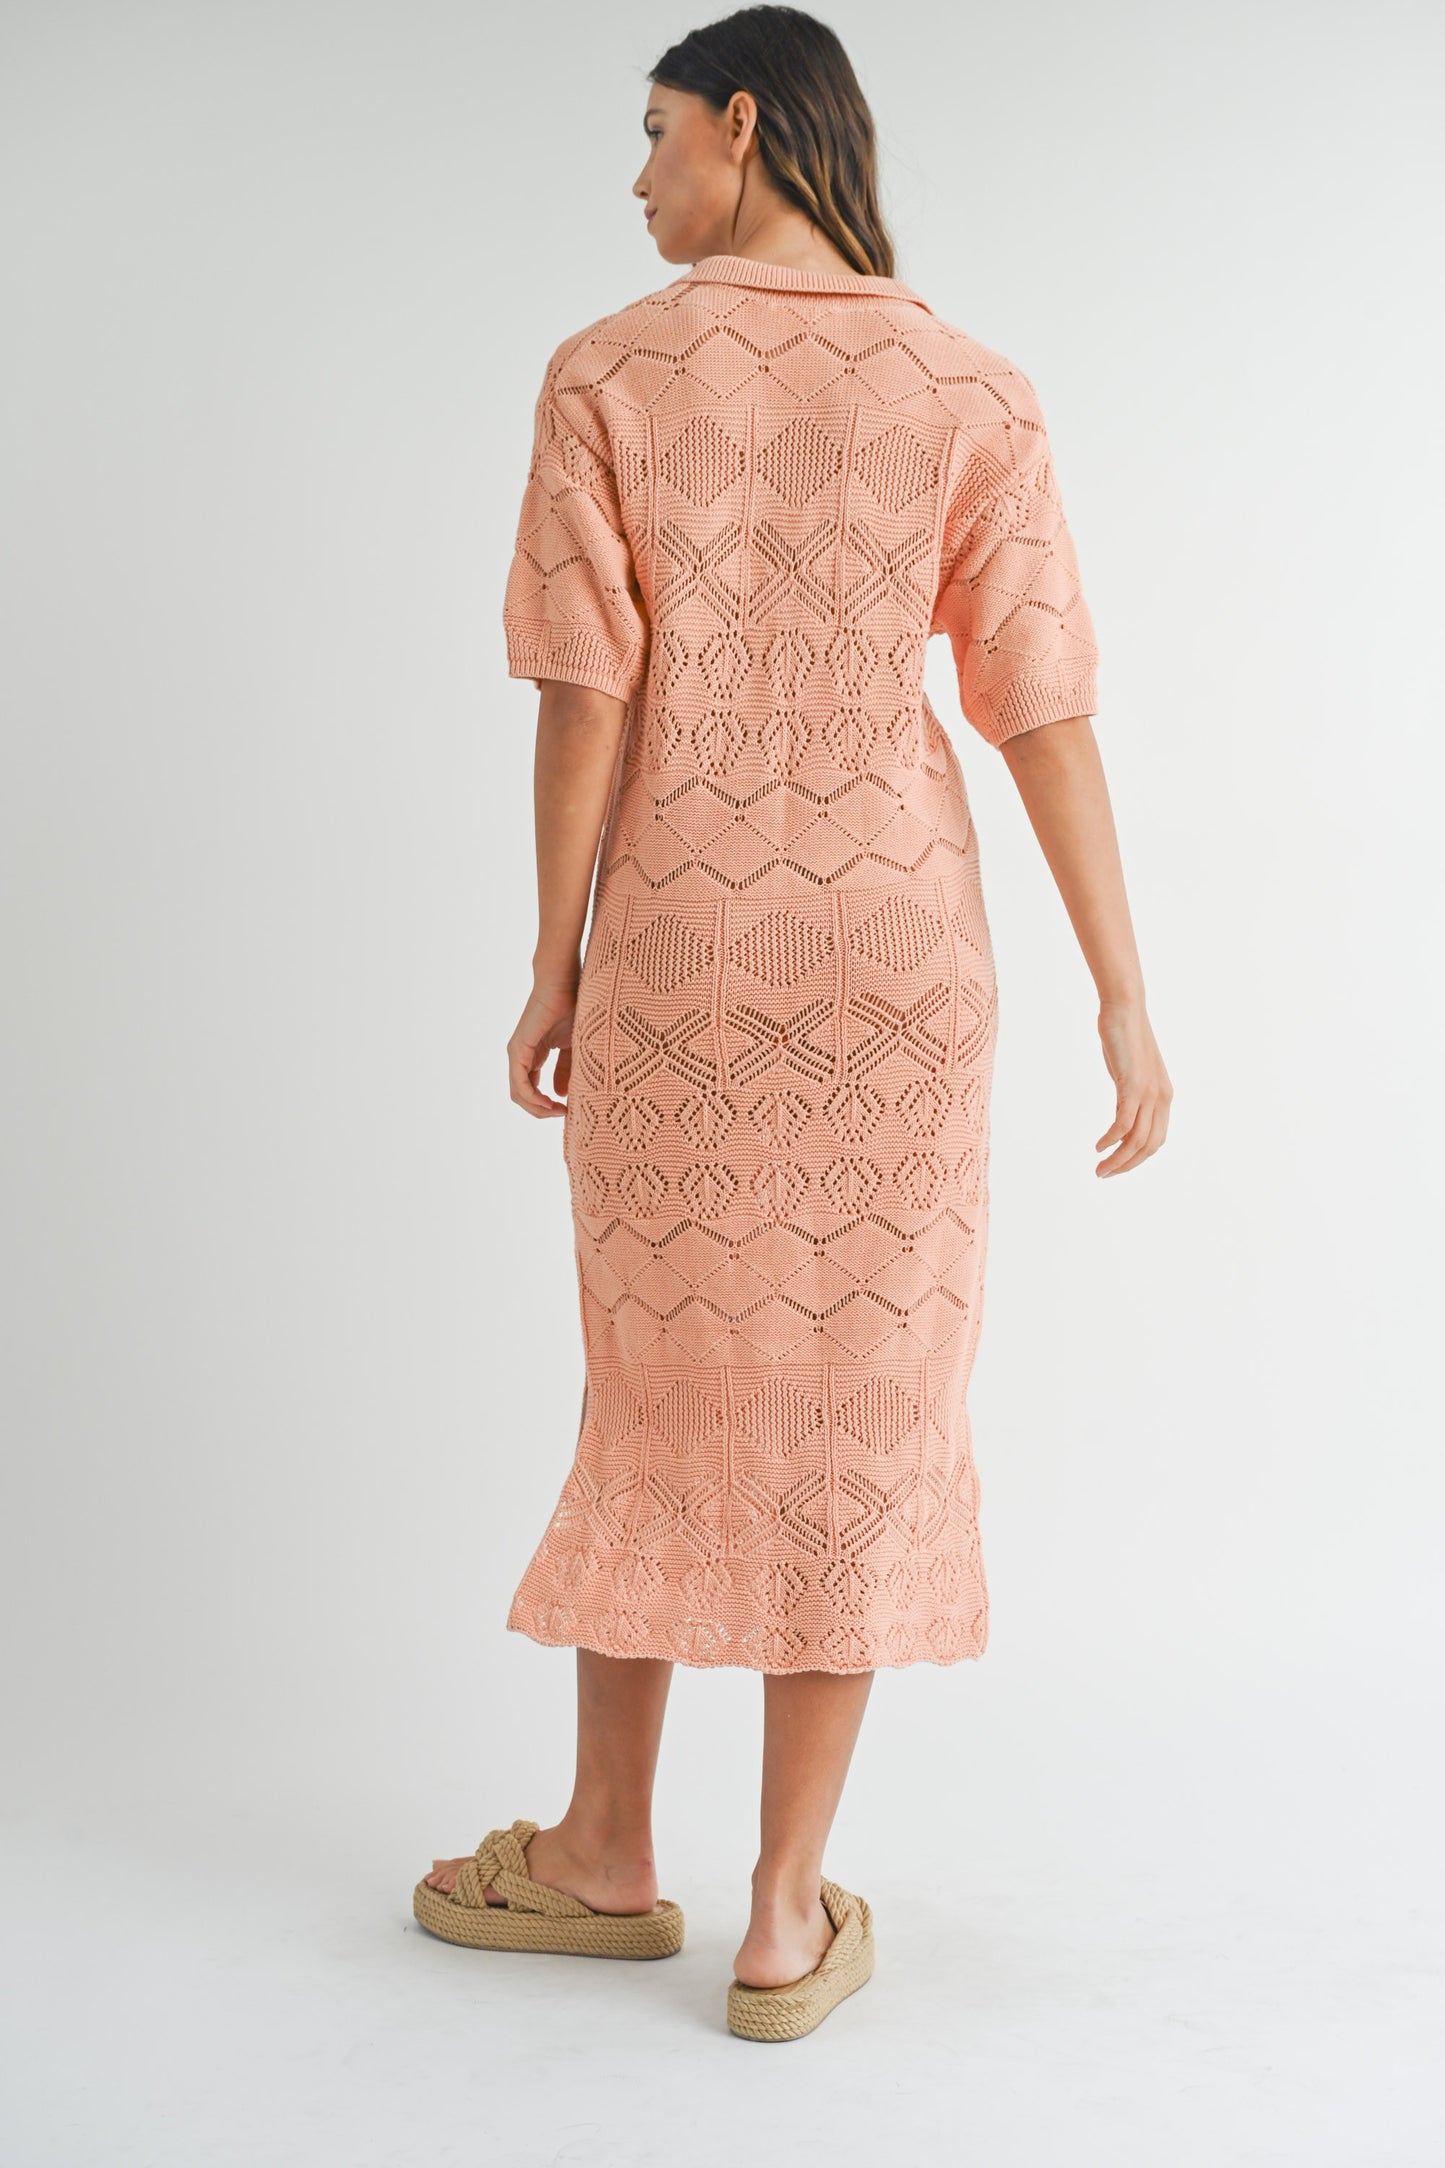 Palma Crochet Dress